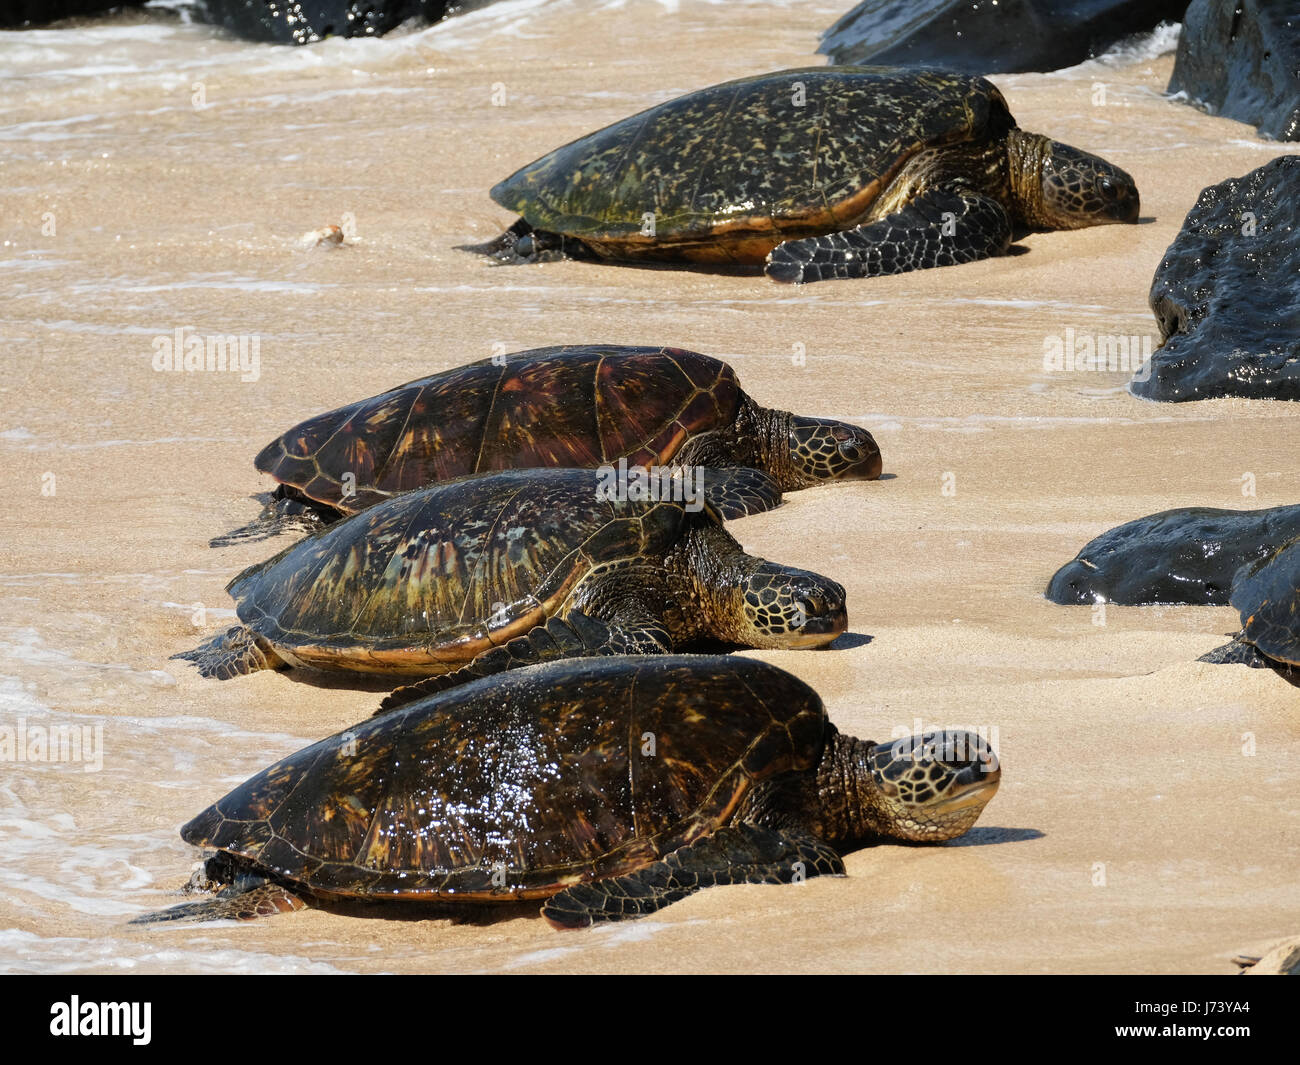 Green Sea Turtles (Chelonia mydas) resting on the beach at Ho'okipa Beach Park, Paia, Maui, Hawaii. Stock Photo